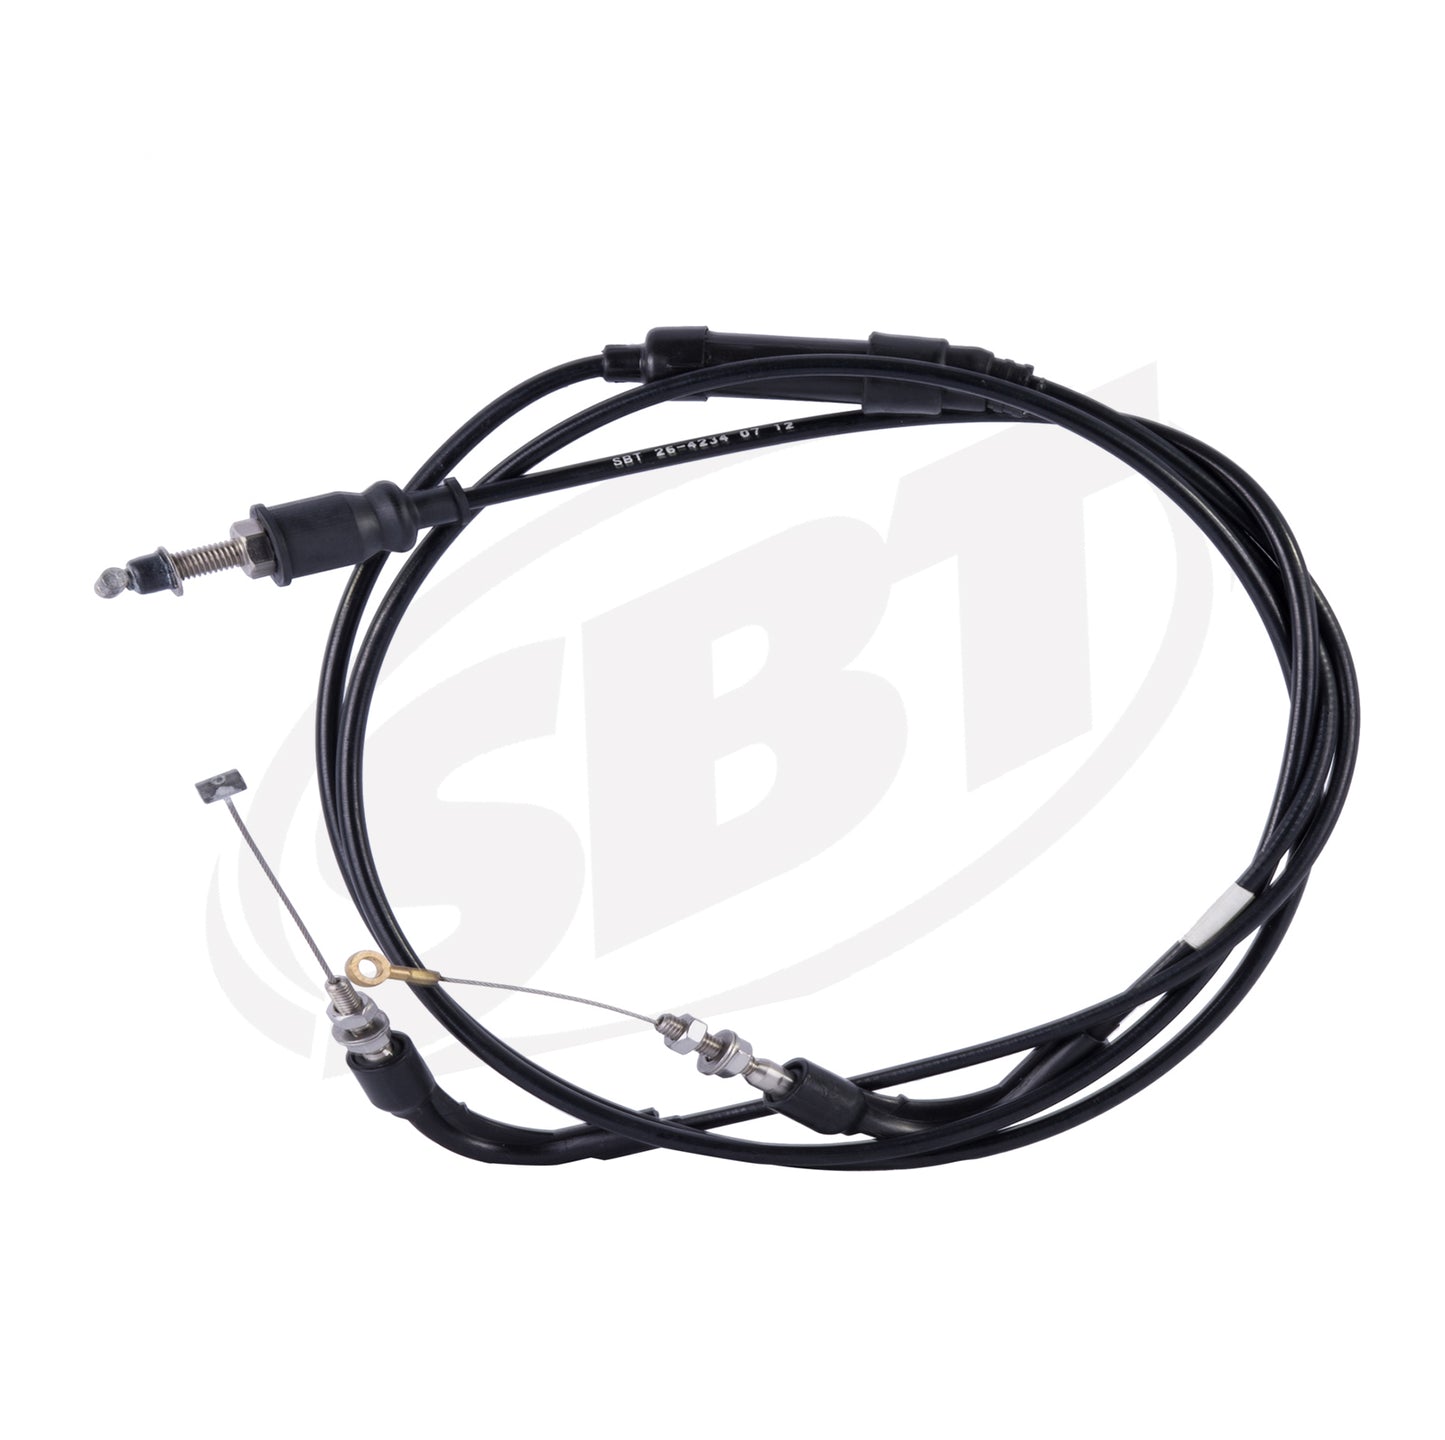 SBT Kawasaki Throttle Cable 1100 STX /900 STX 54012-3769 2003 2004 2005 2006